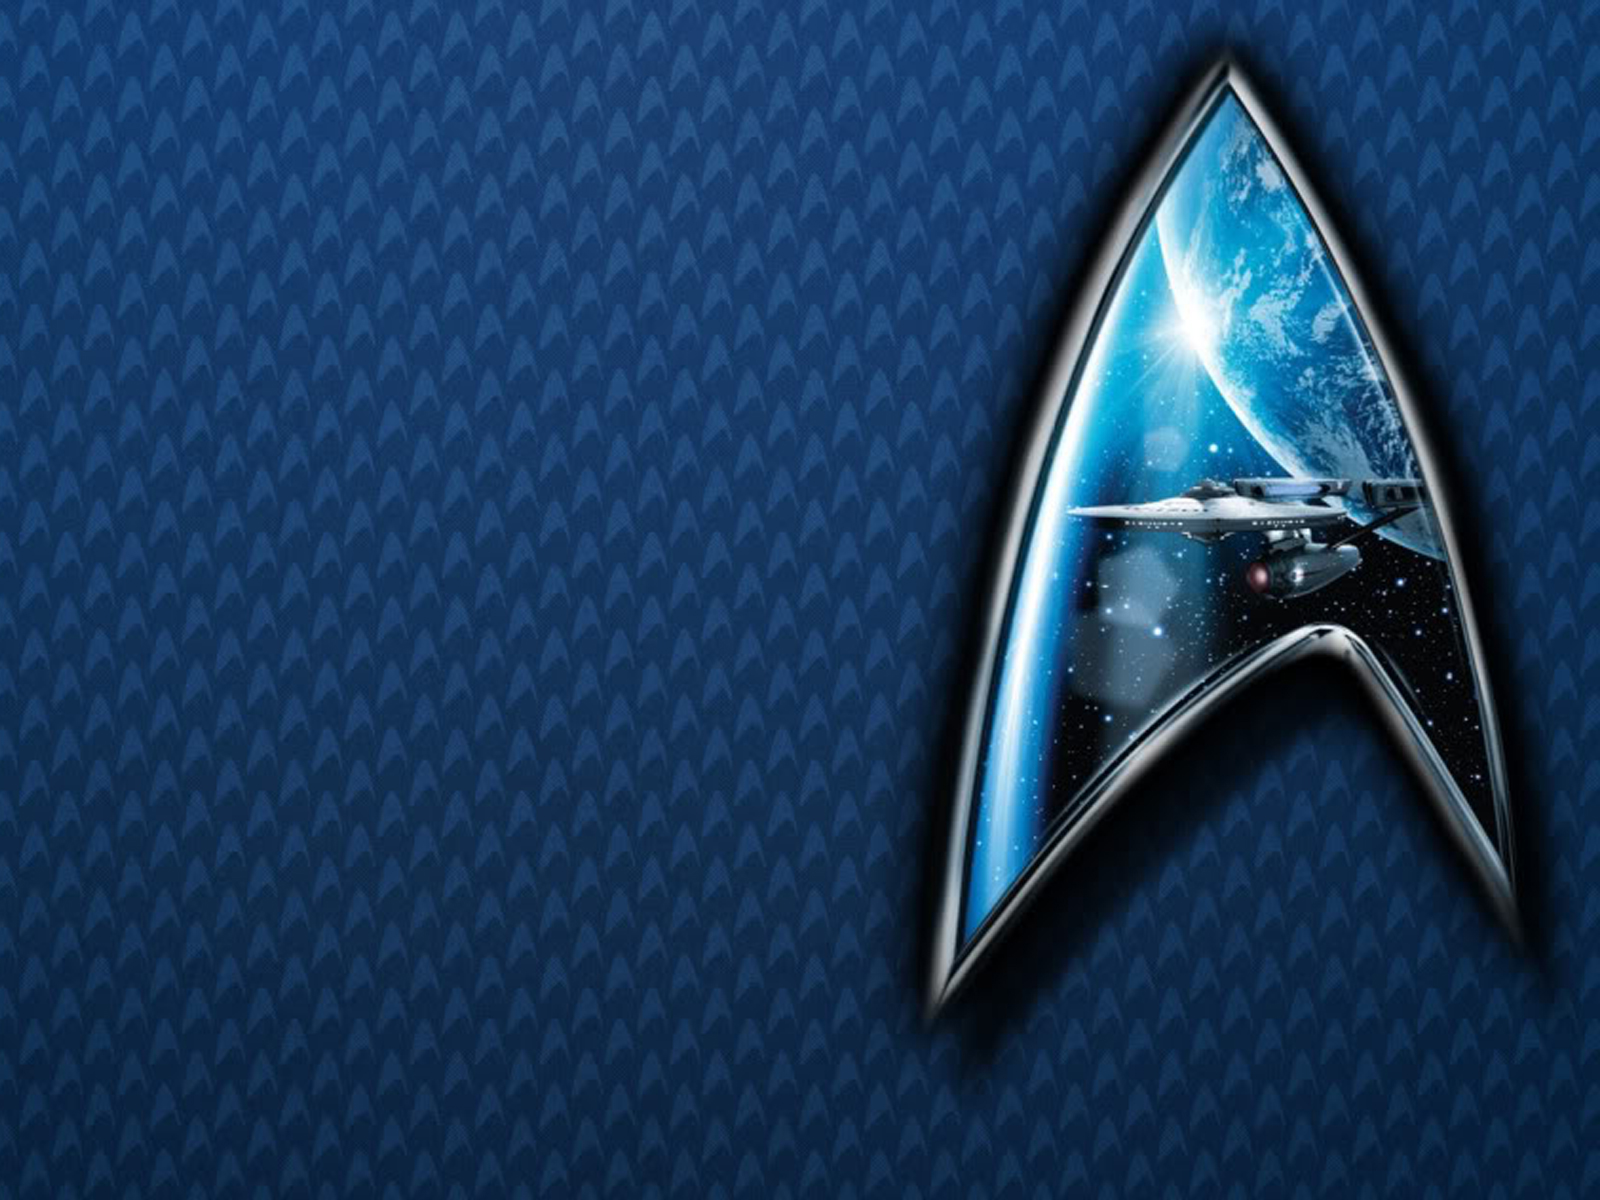 Insignia Star Trek Puter Desktop Wallpaper Pictures Image